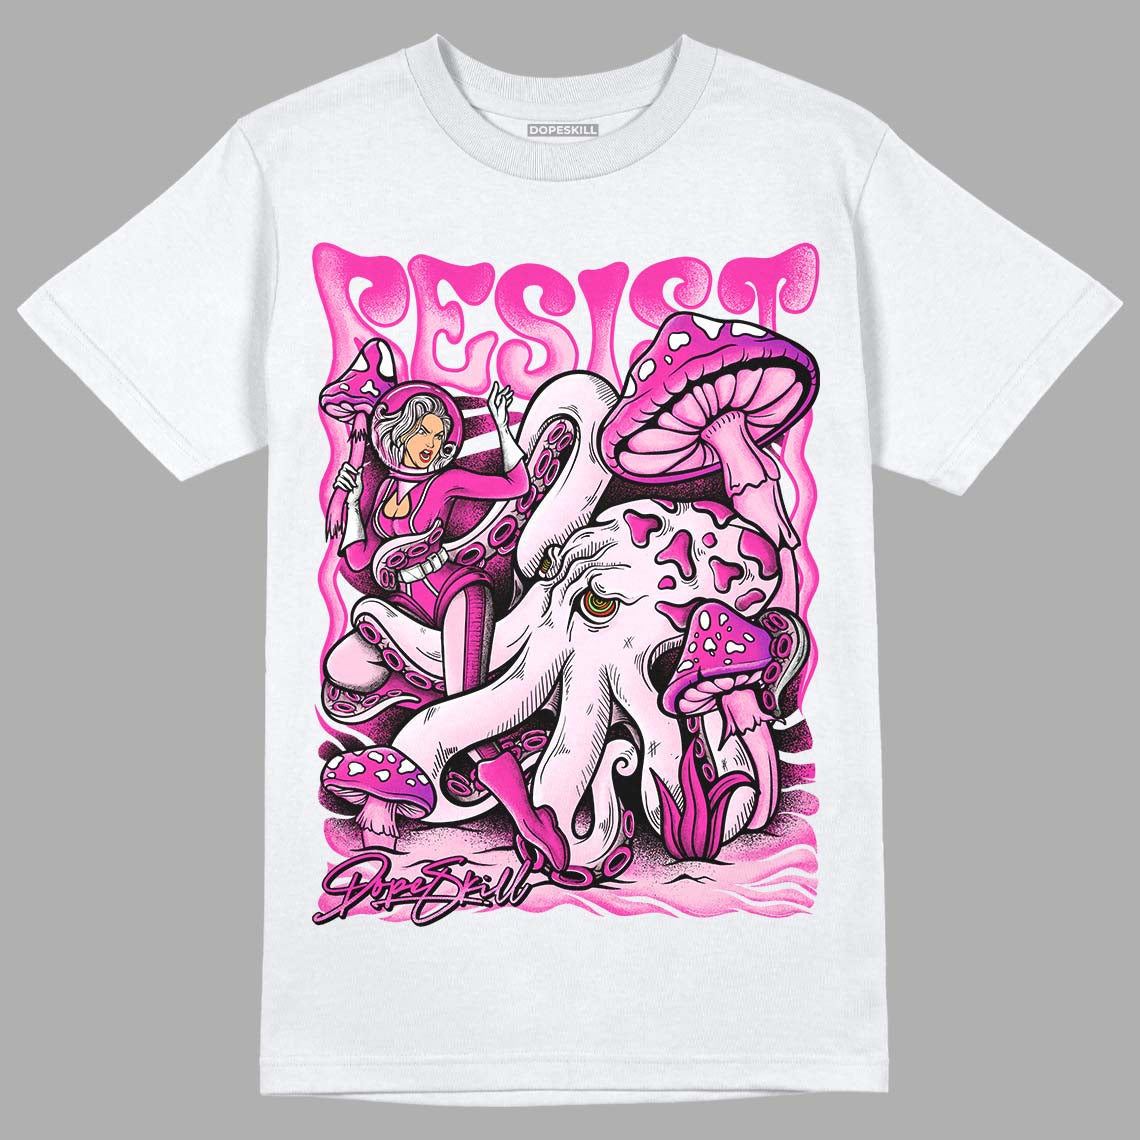 Dunk Low GS 'Triple Pink' DopeSkill T-Shirt Resist Graphic Streetwear - White